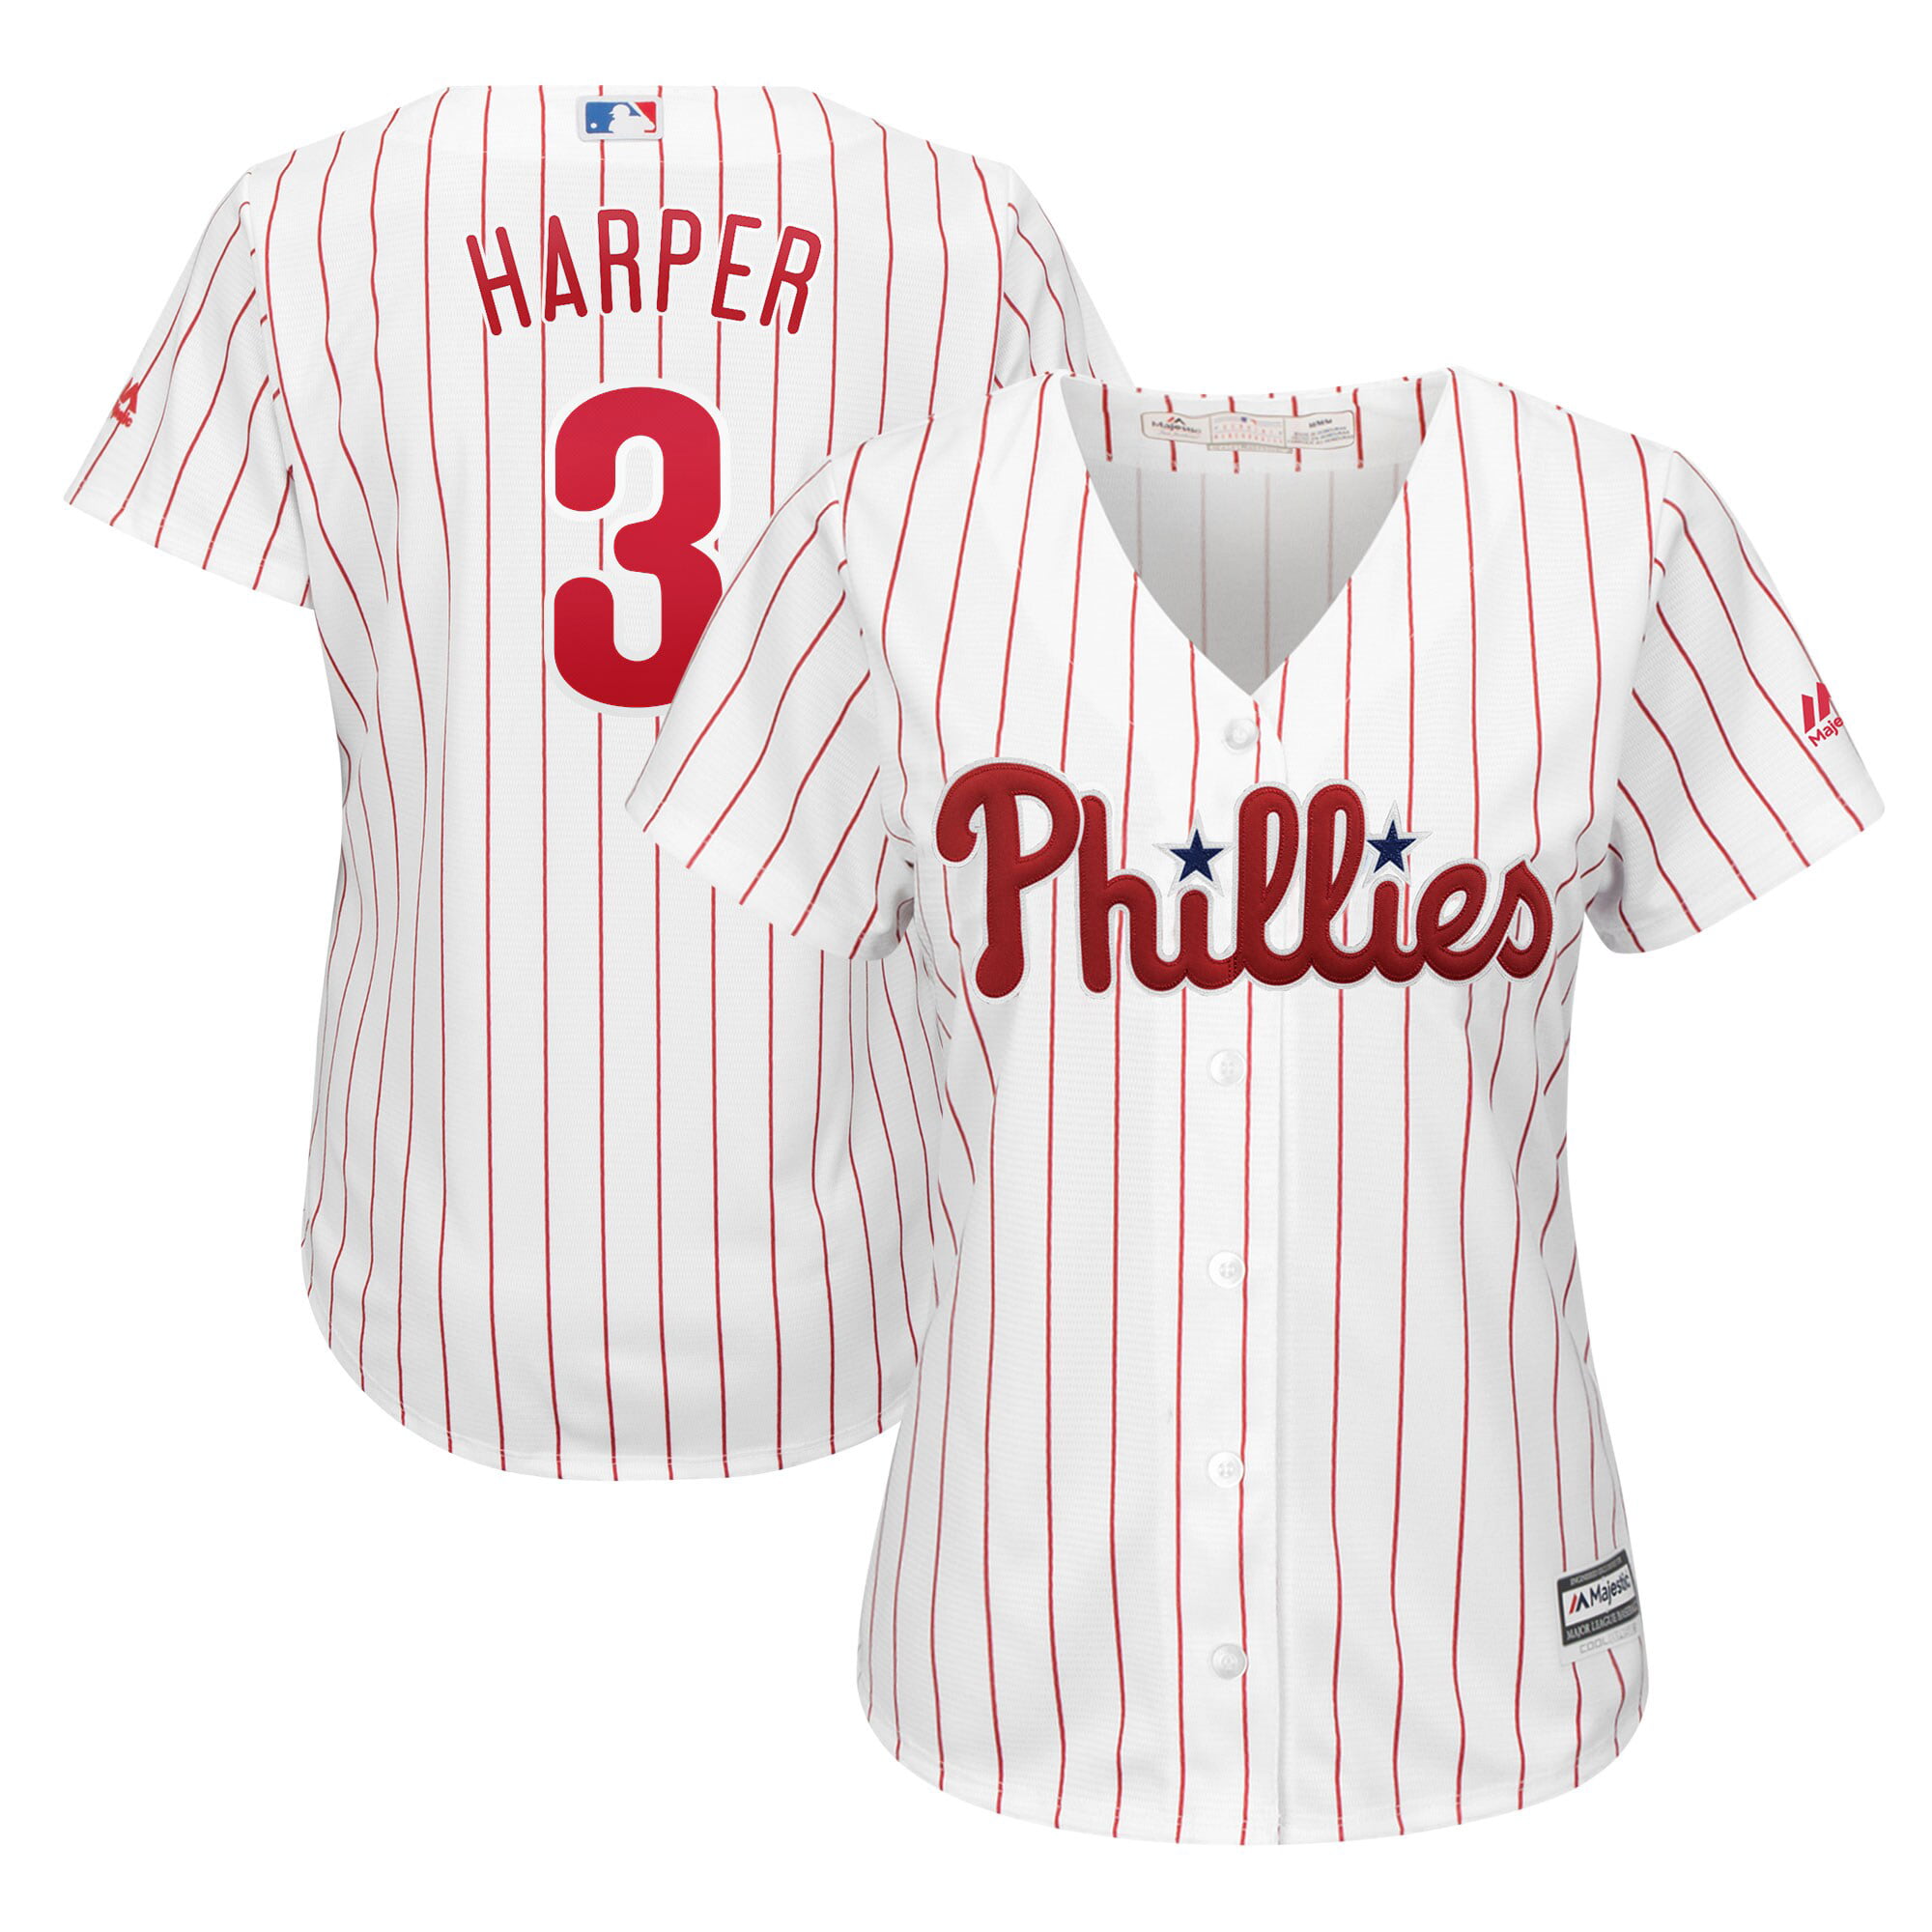 harper baseball jersey